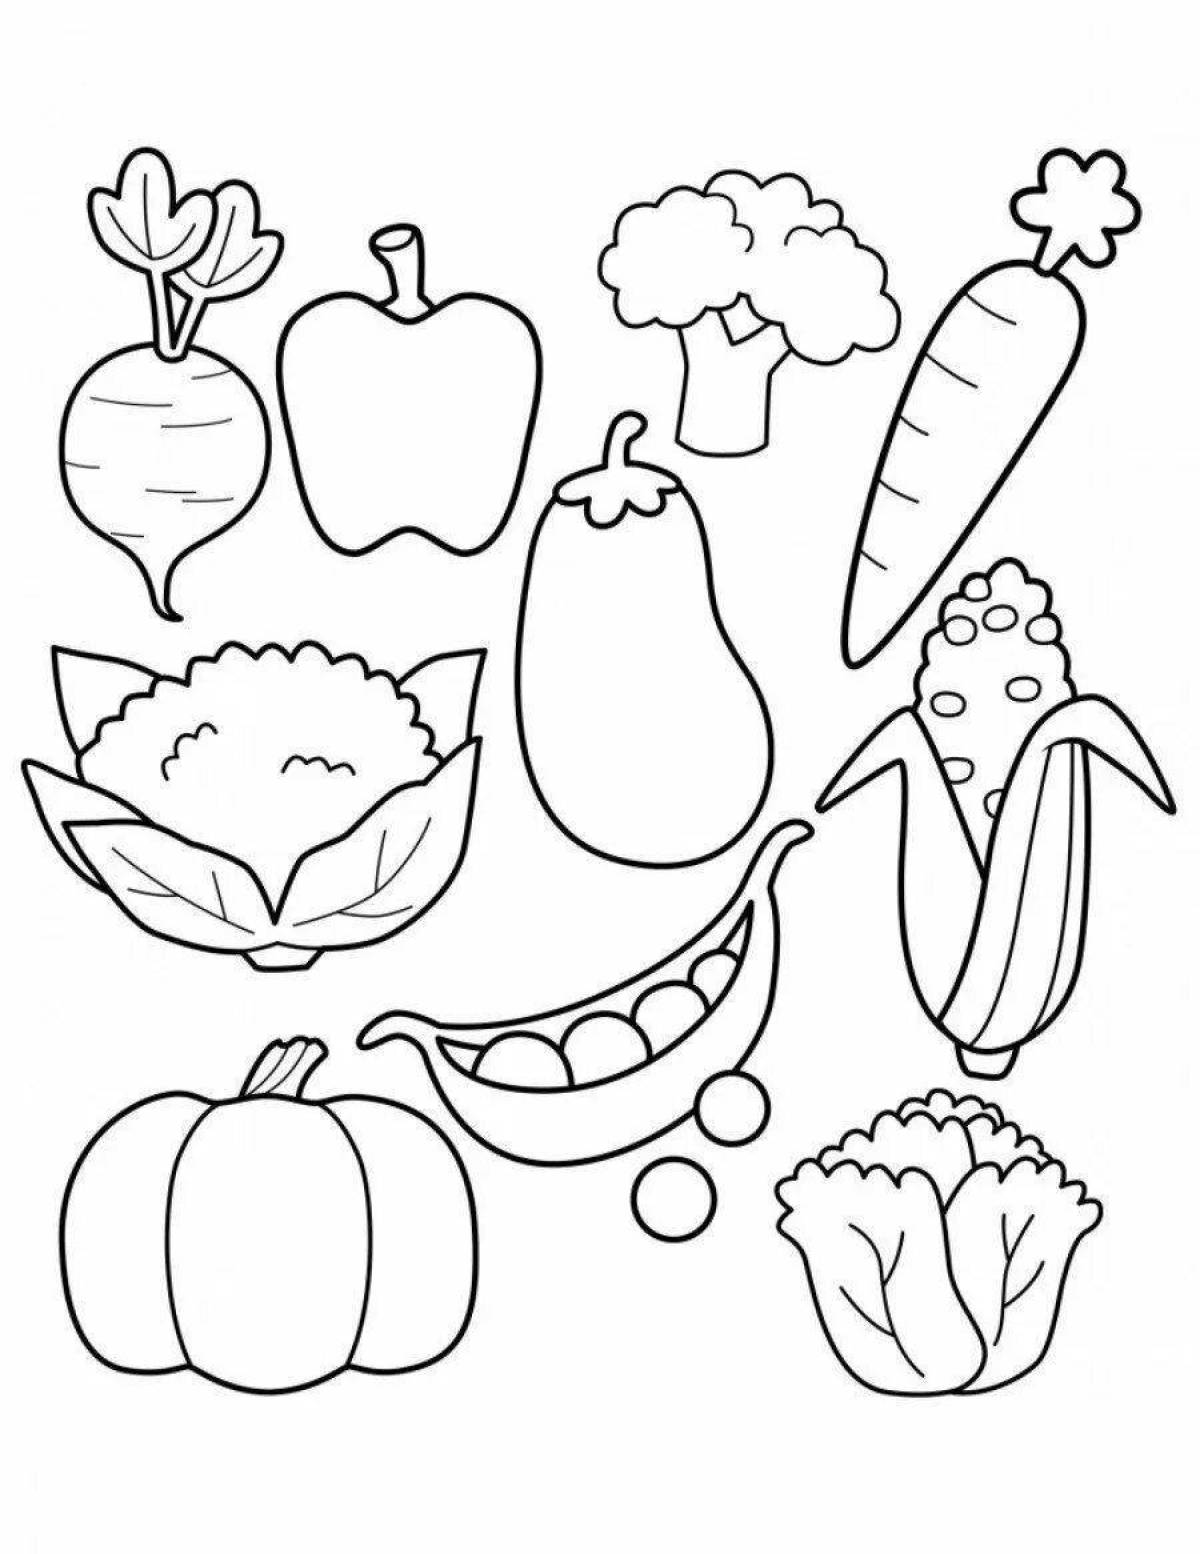 Fun healthy food coloring book for kindergarten kids